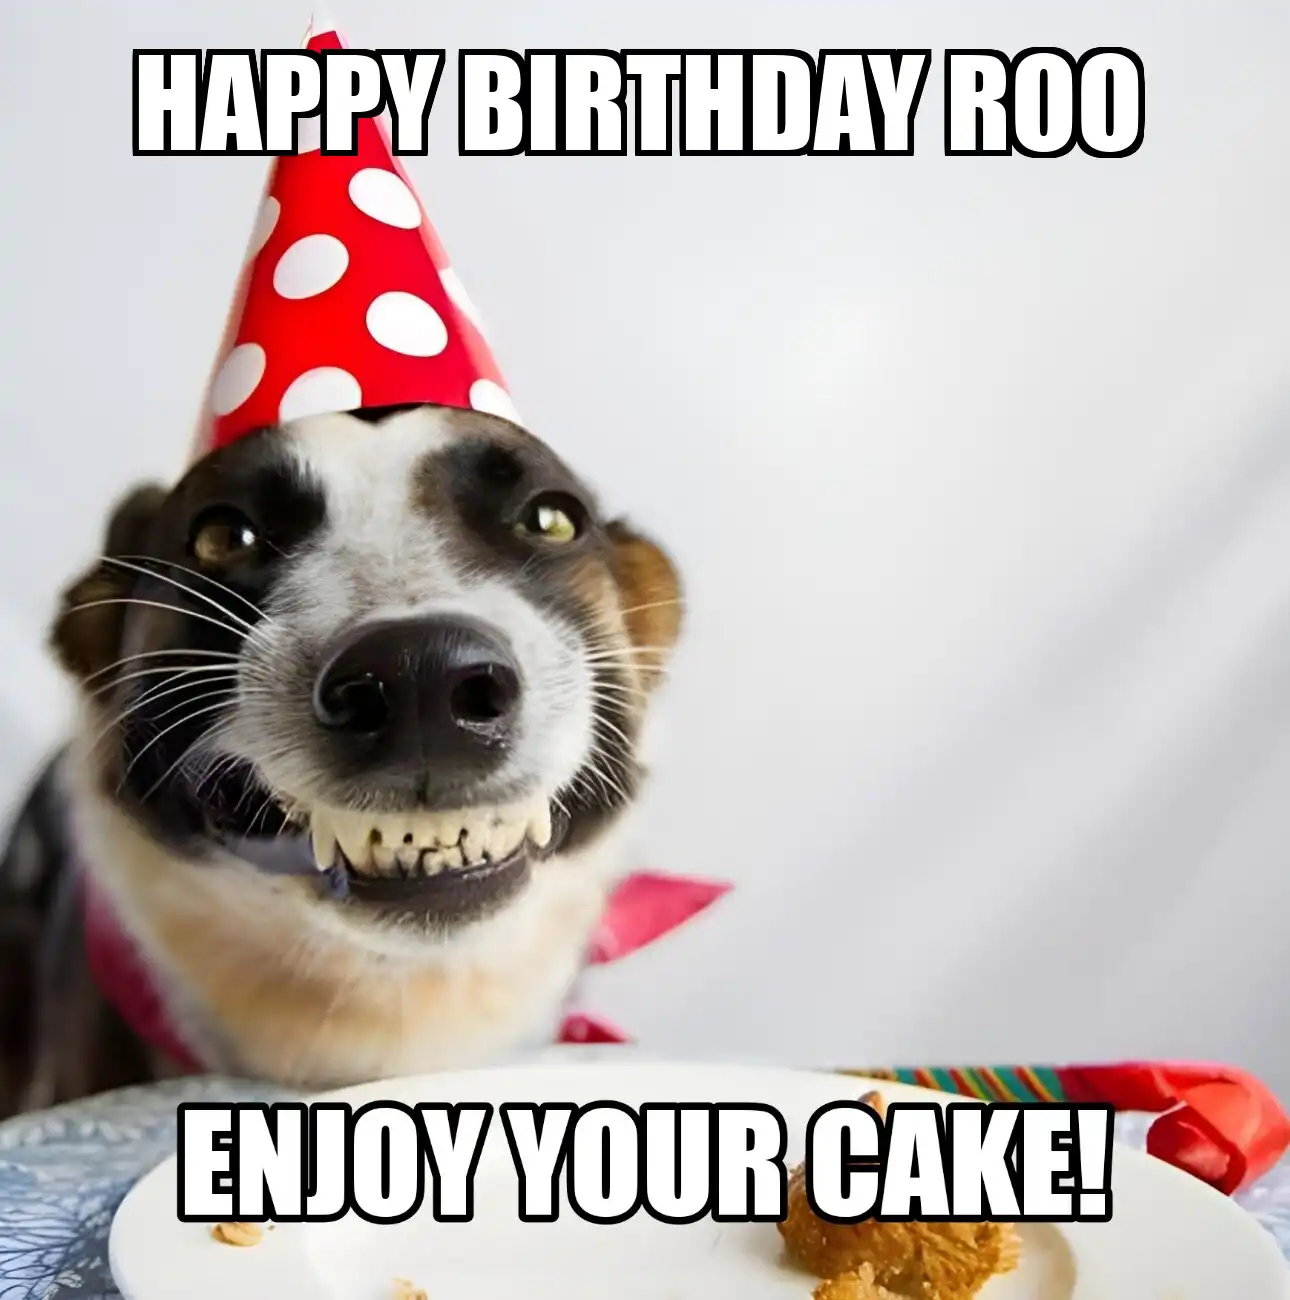 Happy Birthday Roo Enjoy Your Cake Dog Meme